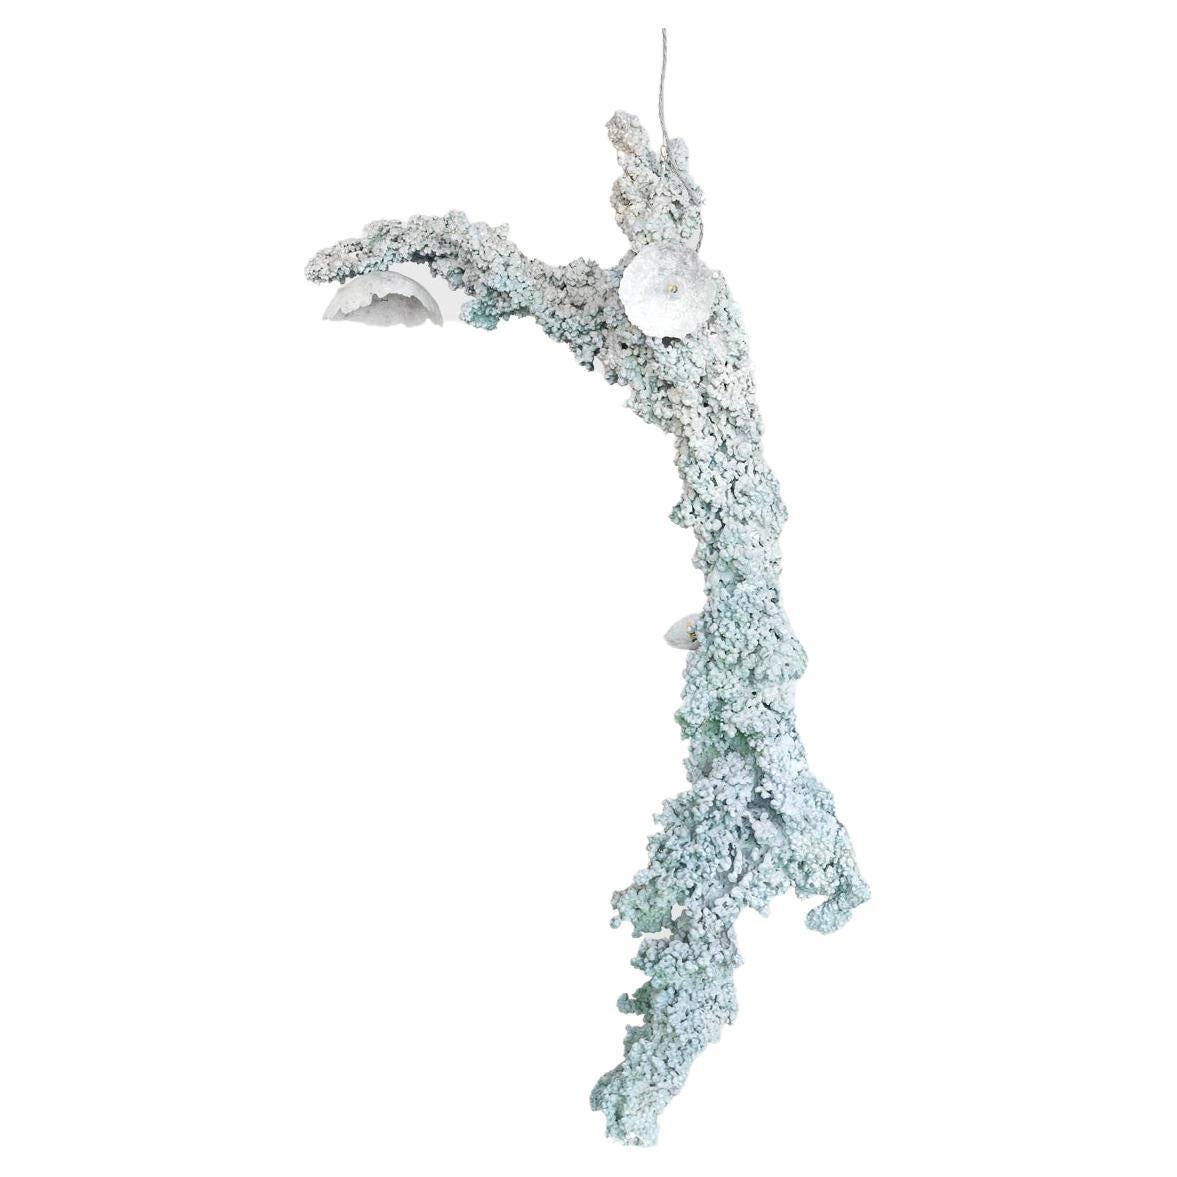 Elissa Lacoste Contemporary Hanging Chandelier model Verdigris, aluminum, resin